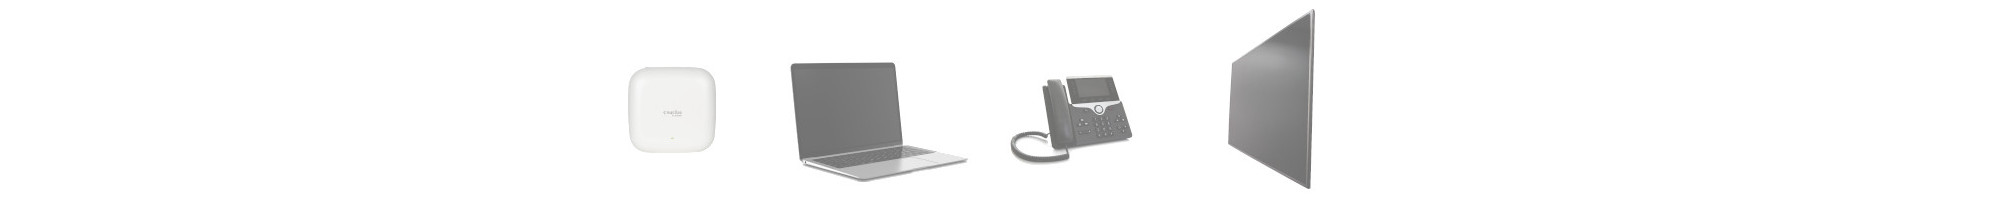 PoE fähige Endgeräte: Wireless Access Point, Notebook, Bürotelefon, Display